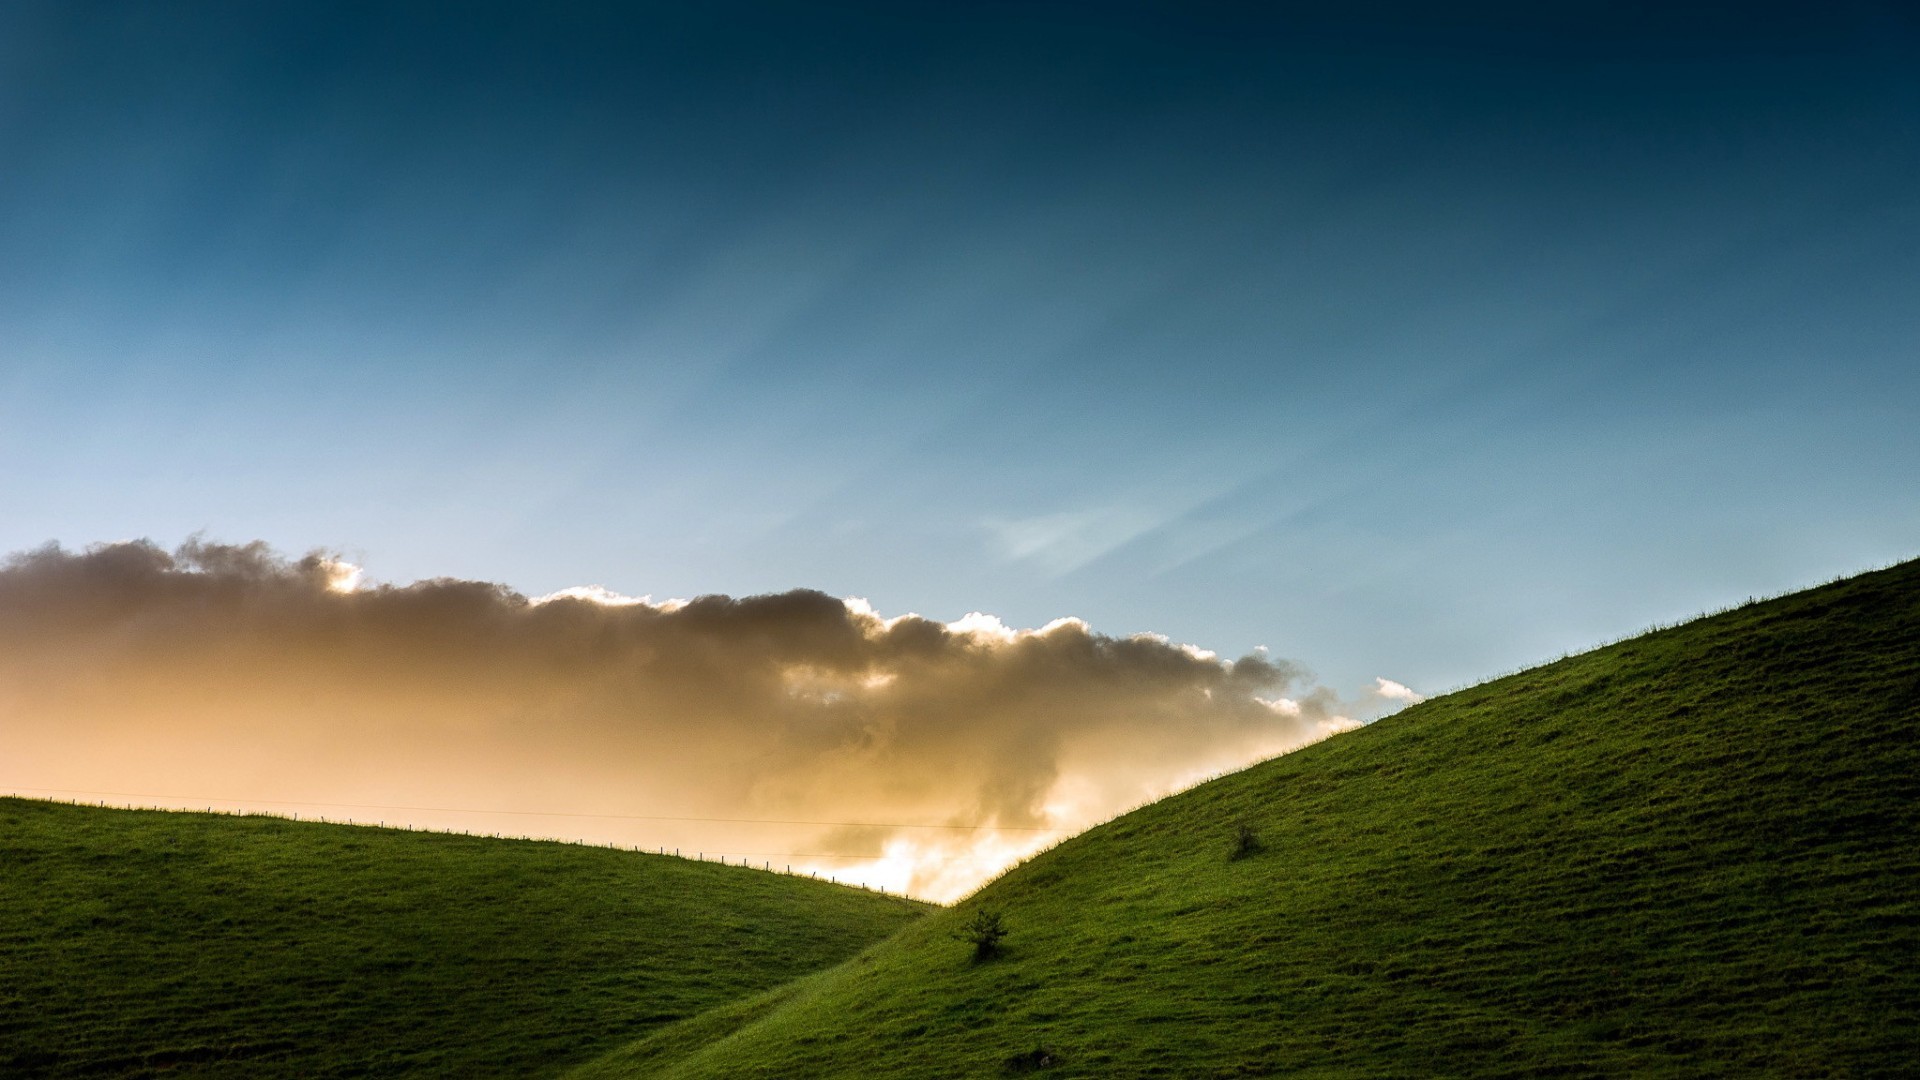 General 1920x1080 nature landscape clouds hills grass sun rays fence calm sunset